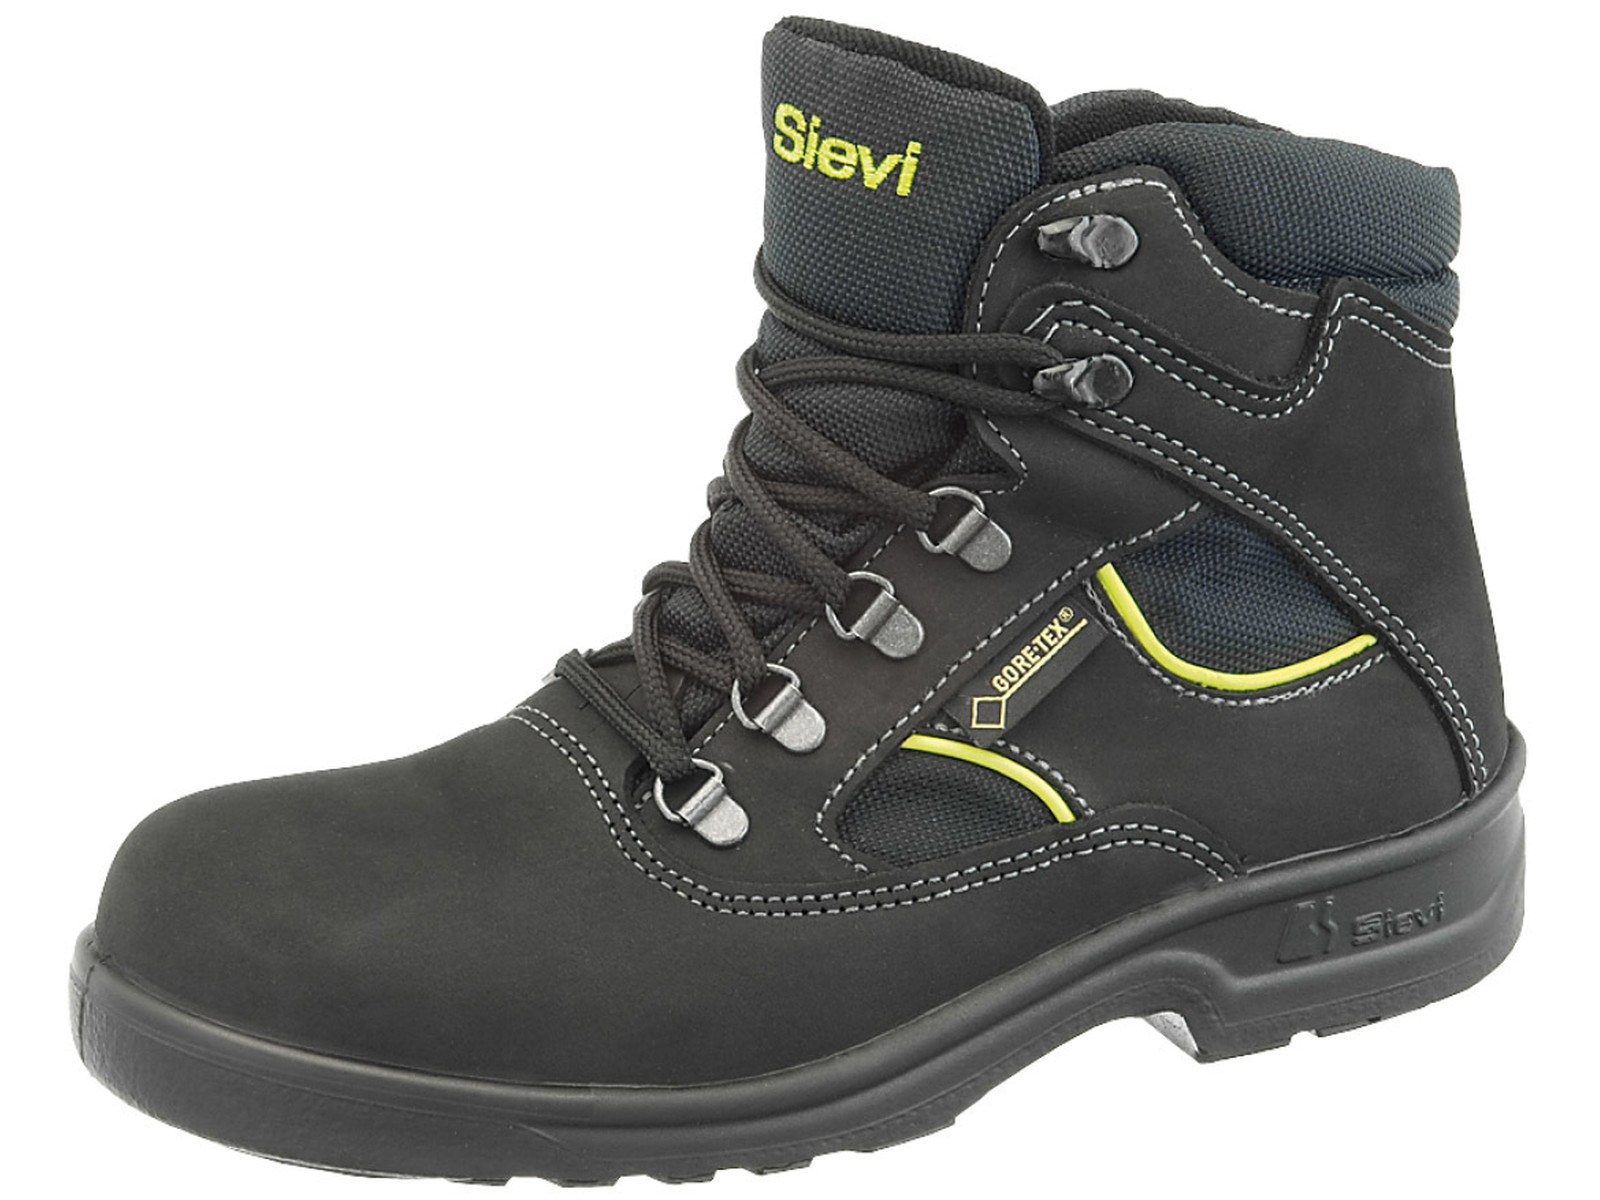 Safety Shoes - GT 2 S2 » Sievin Jalkine Oy